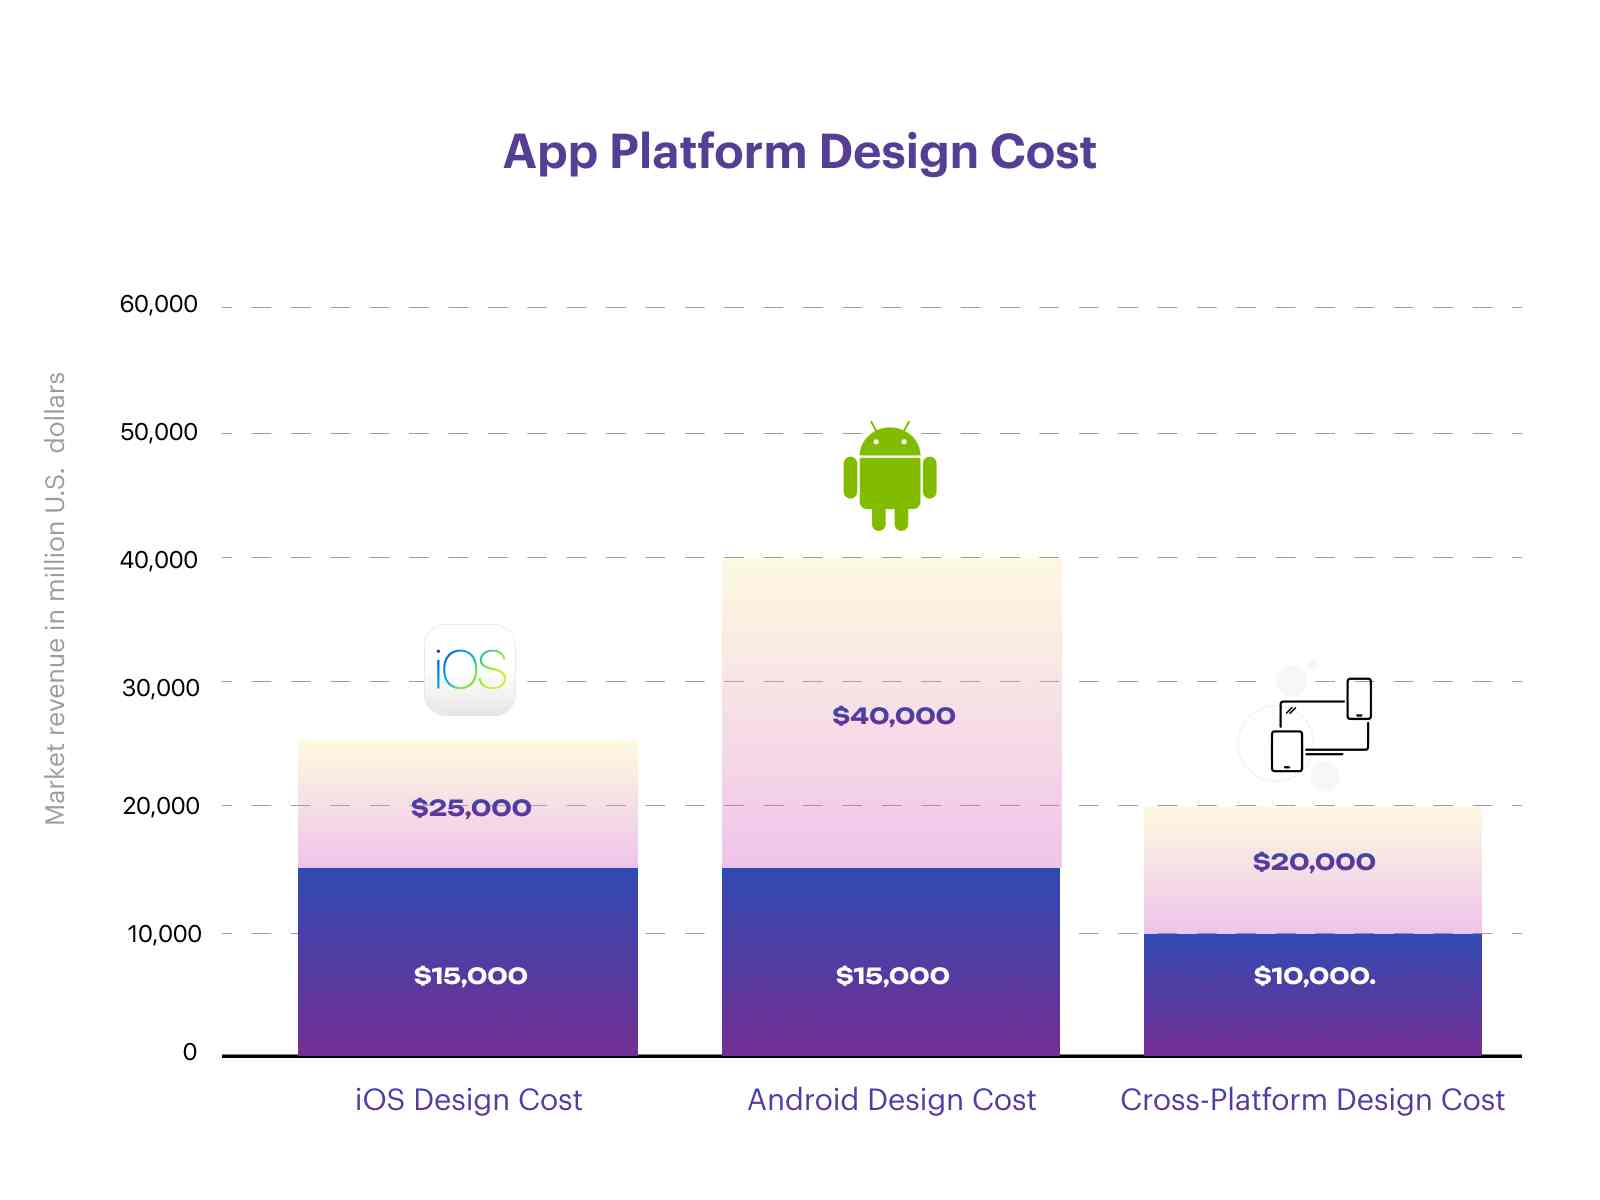 App platform design cost